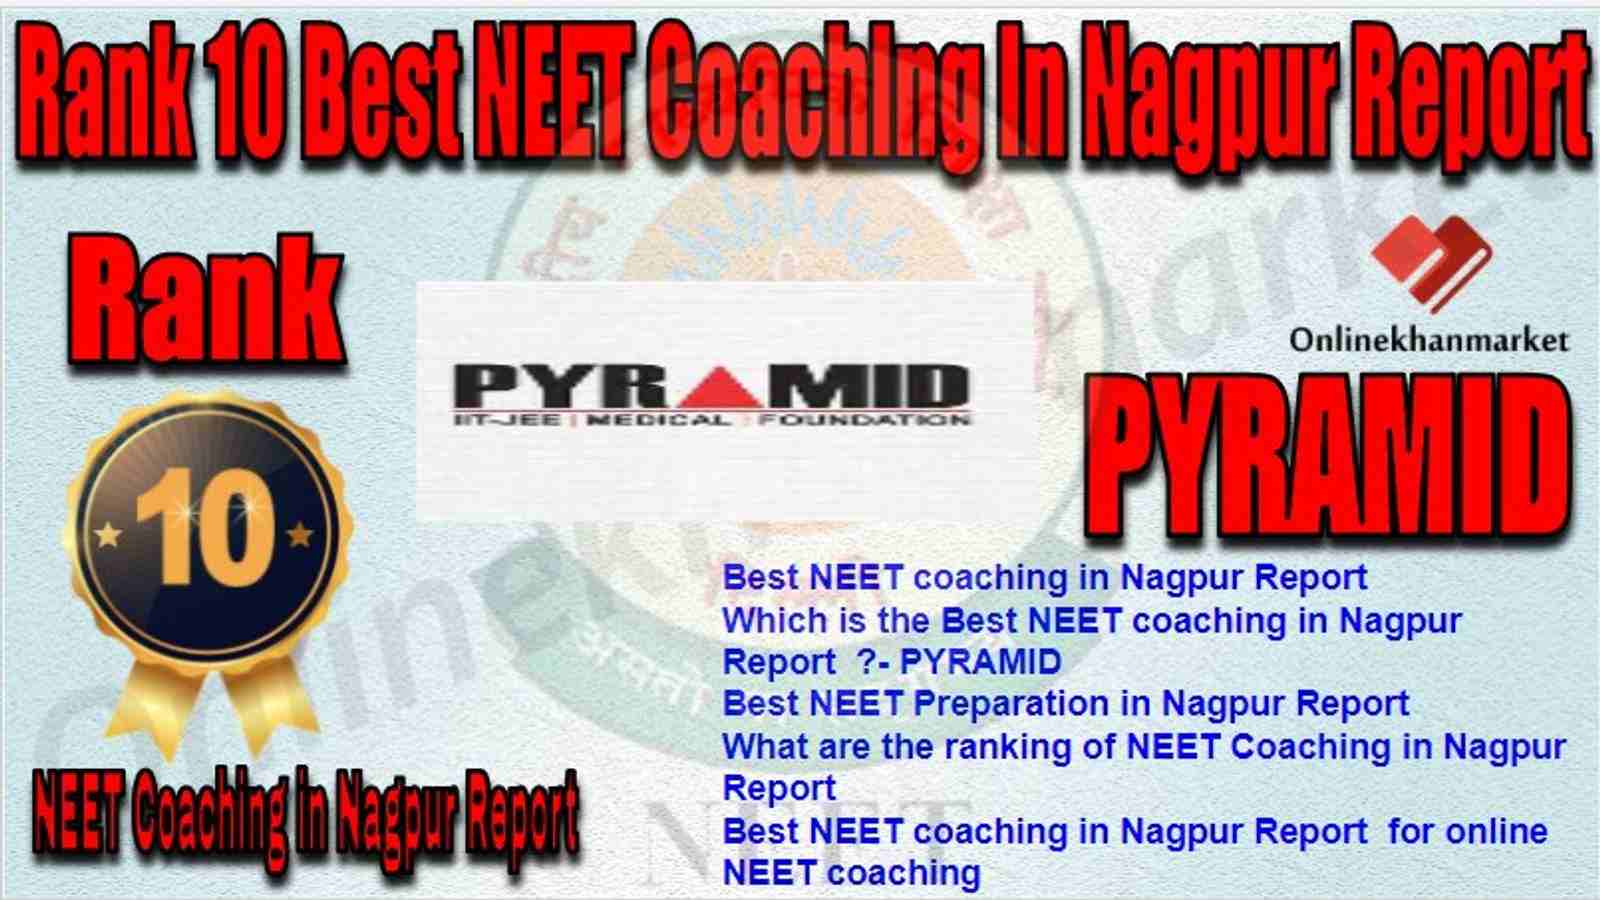 Rank 10 Best NEET Coaching nagpur report